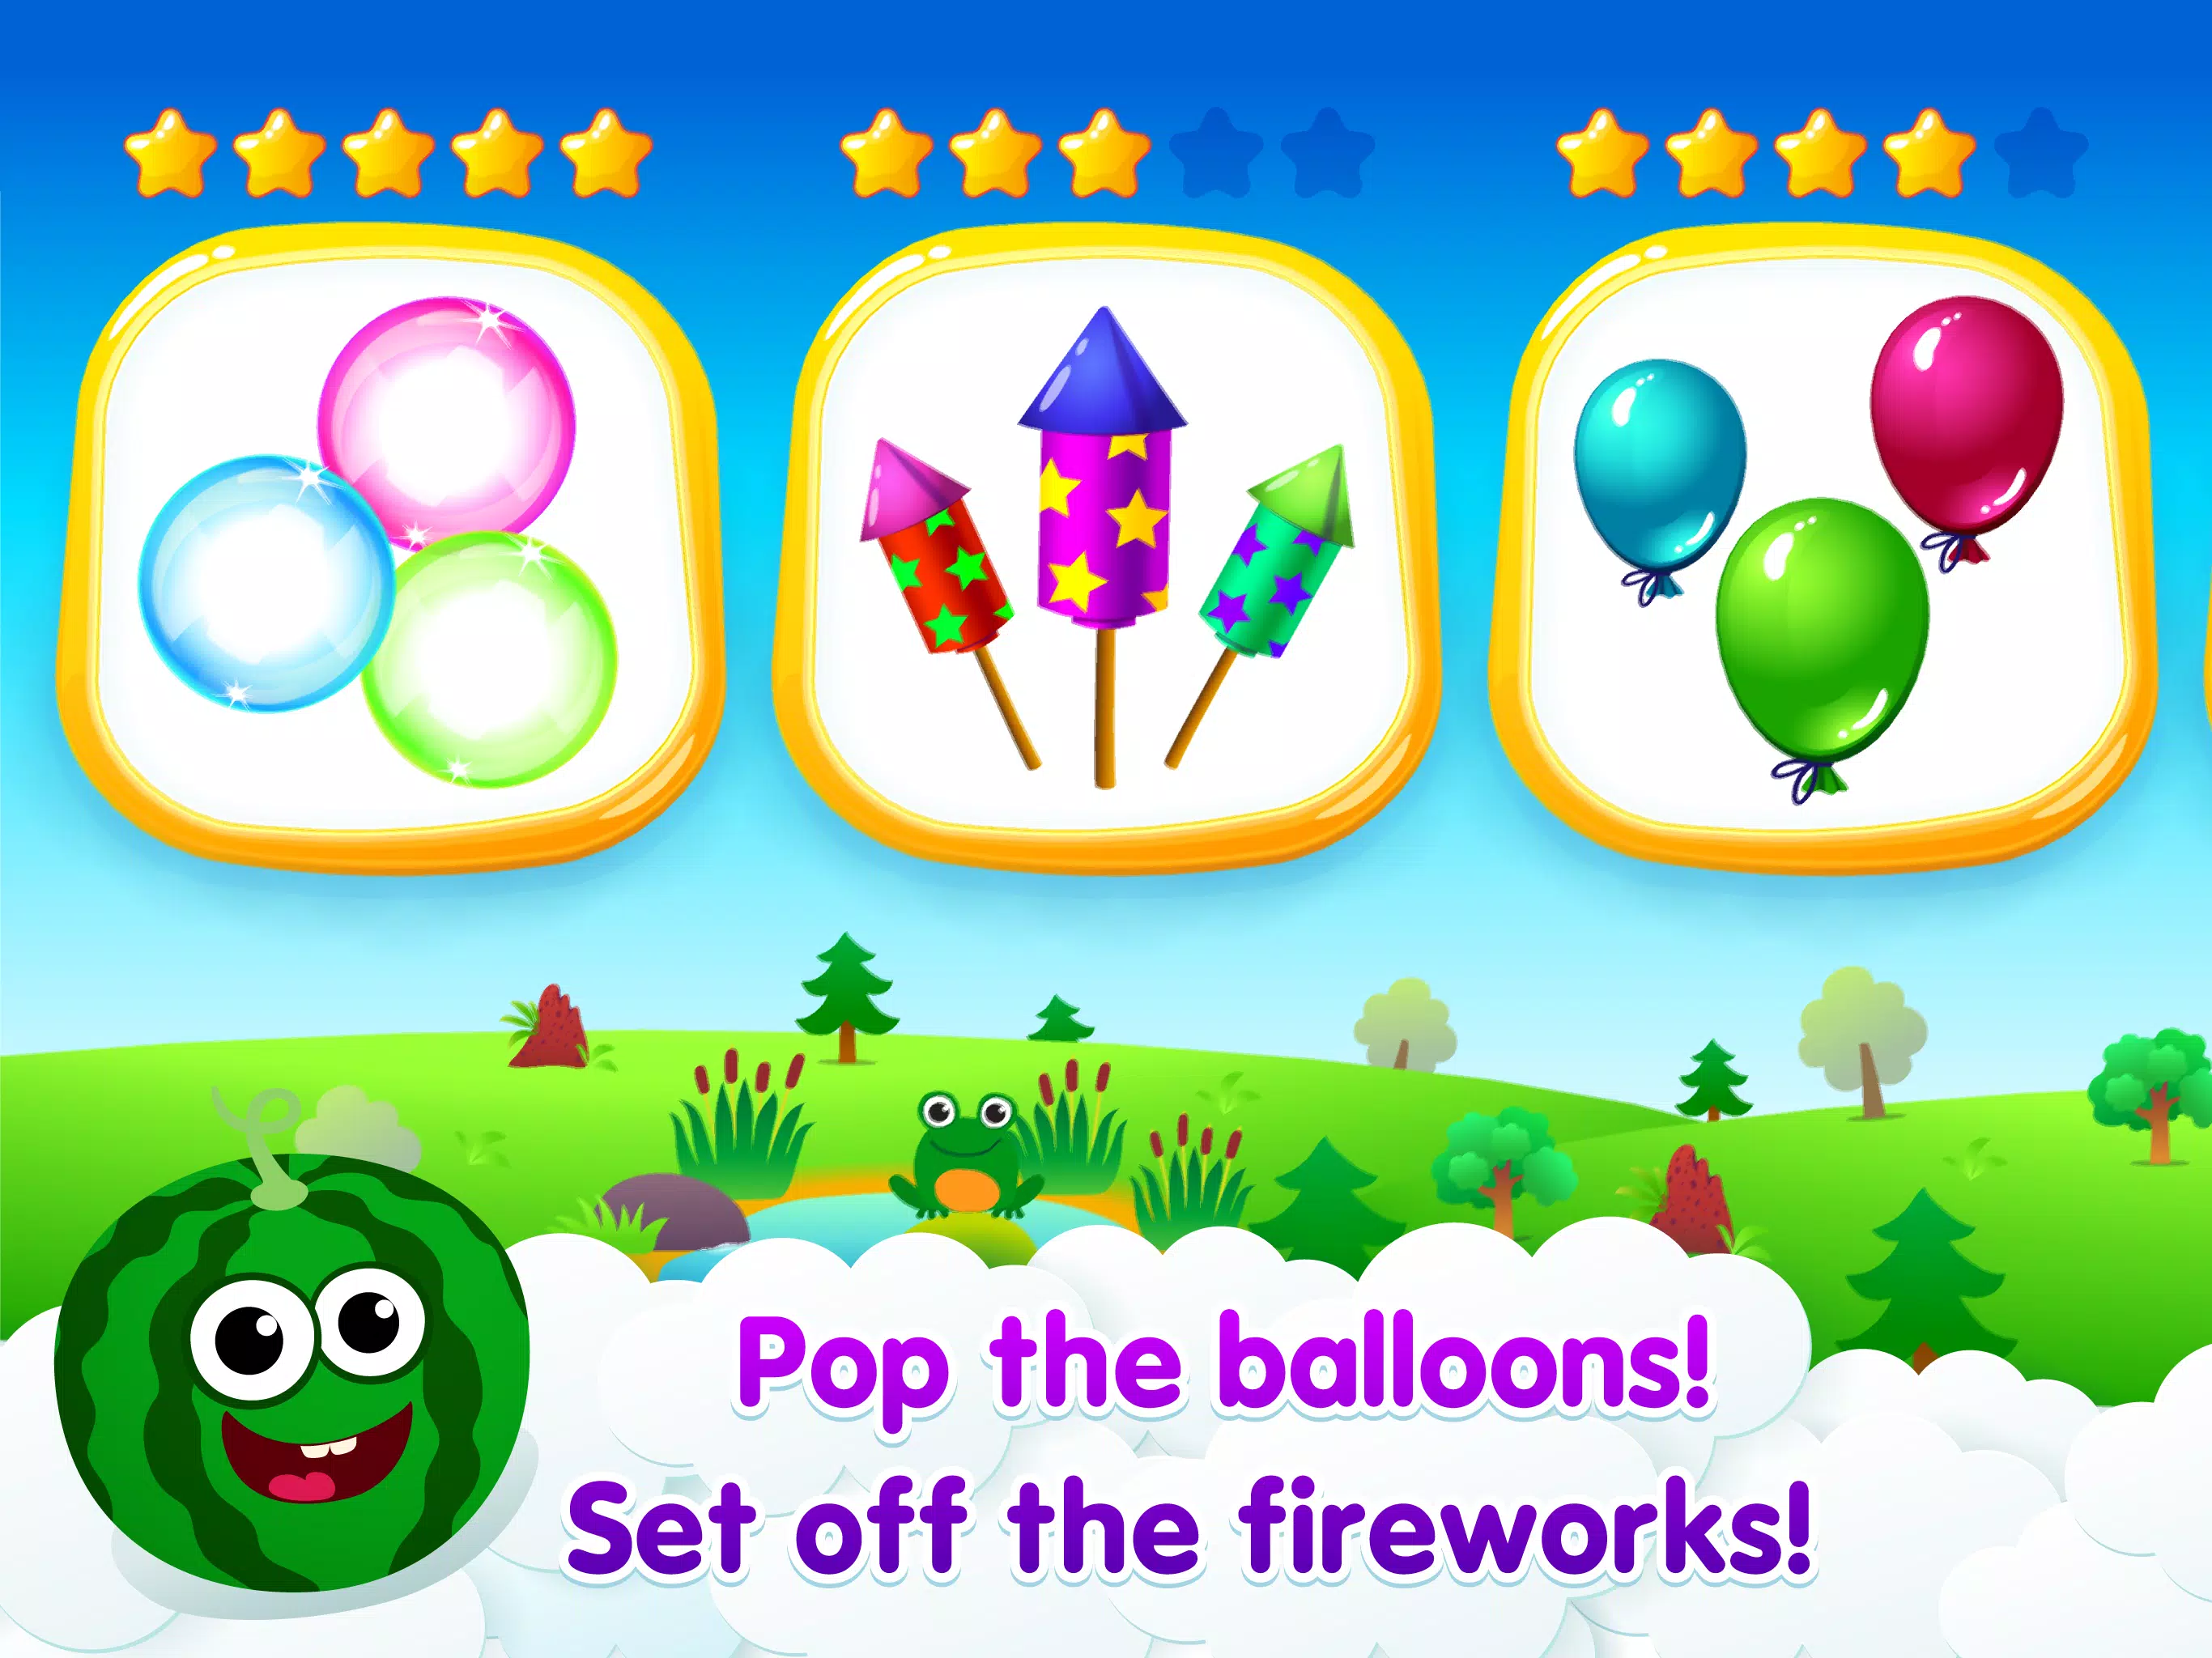 Download do APK de Jogo de bebê - Bubble pop game para Android